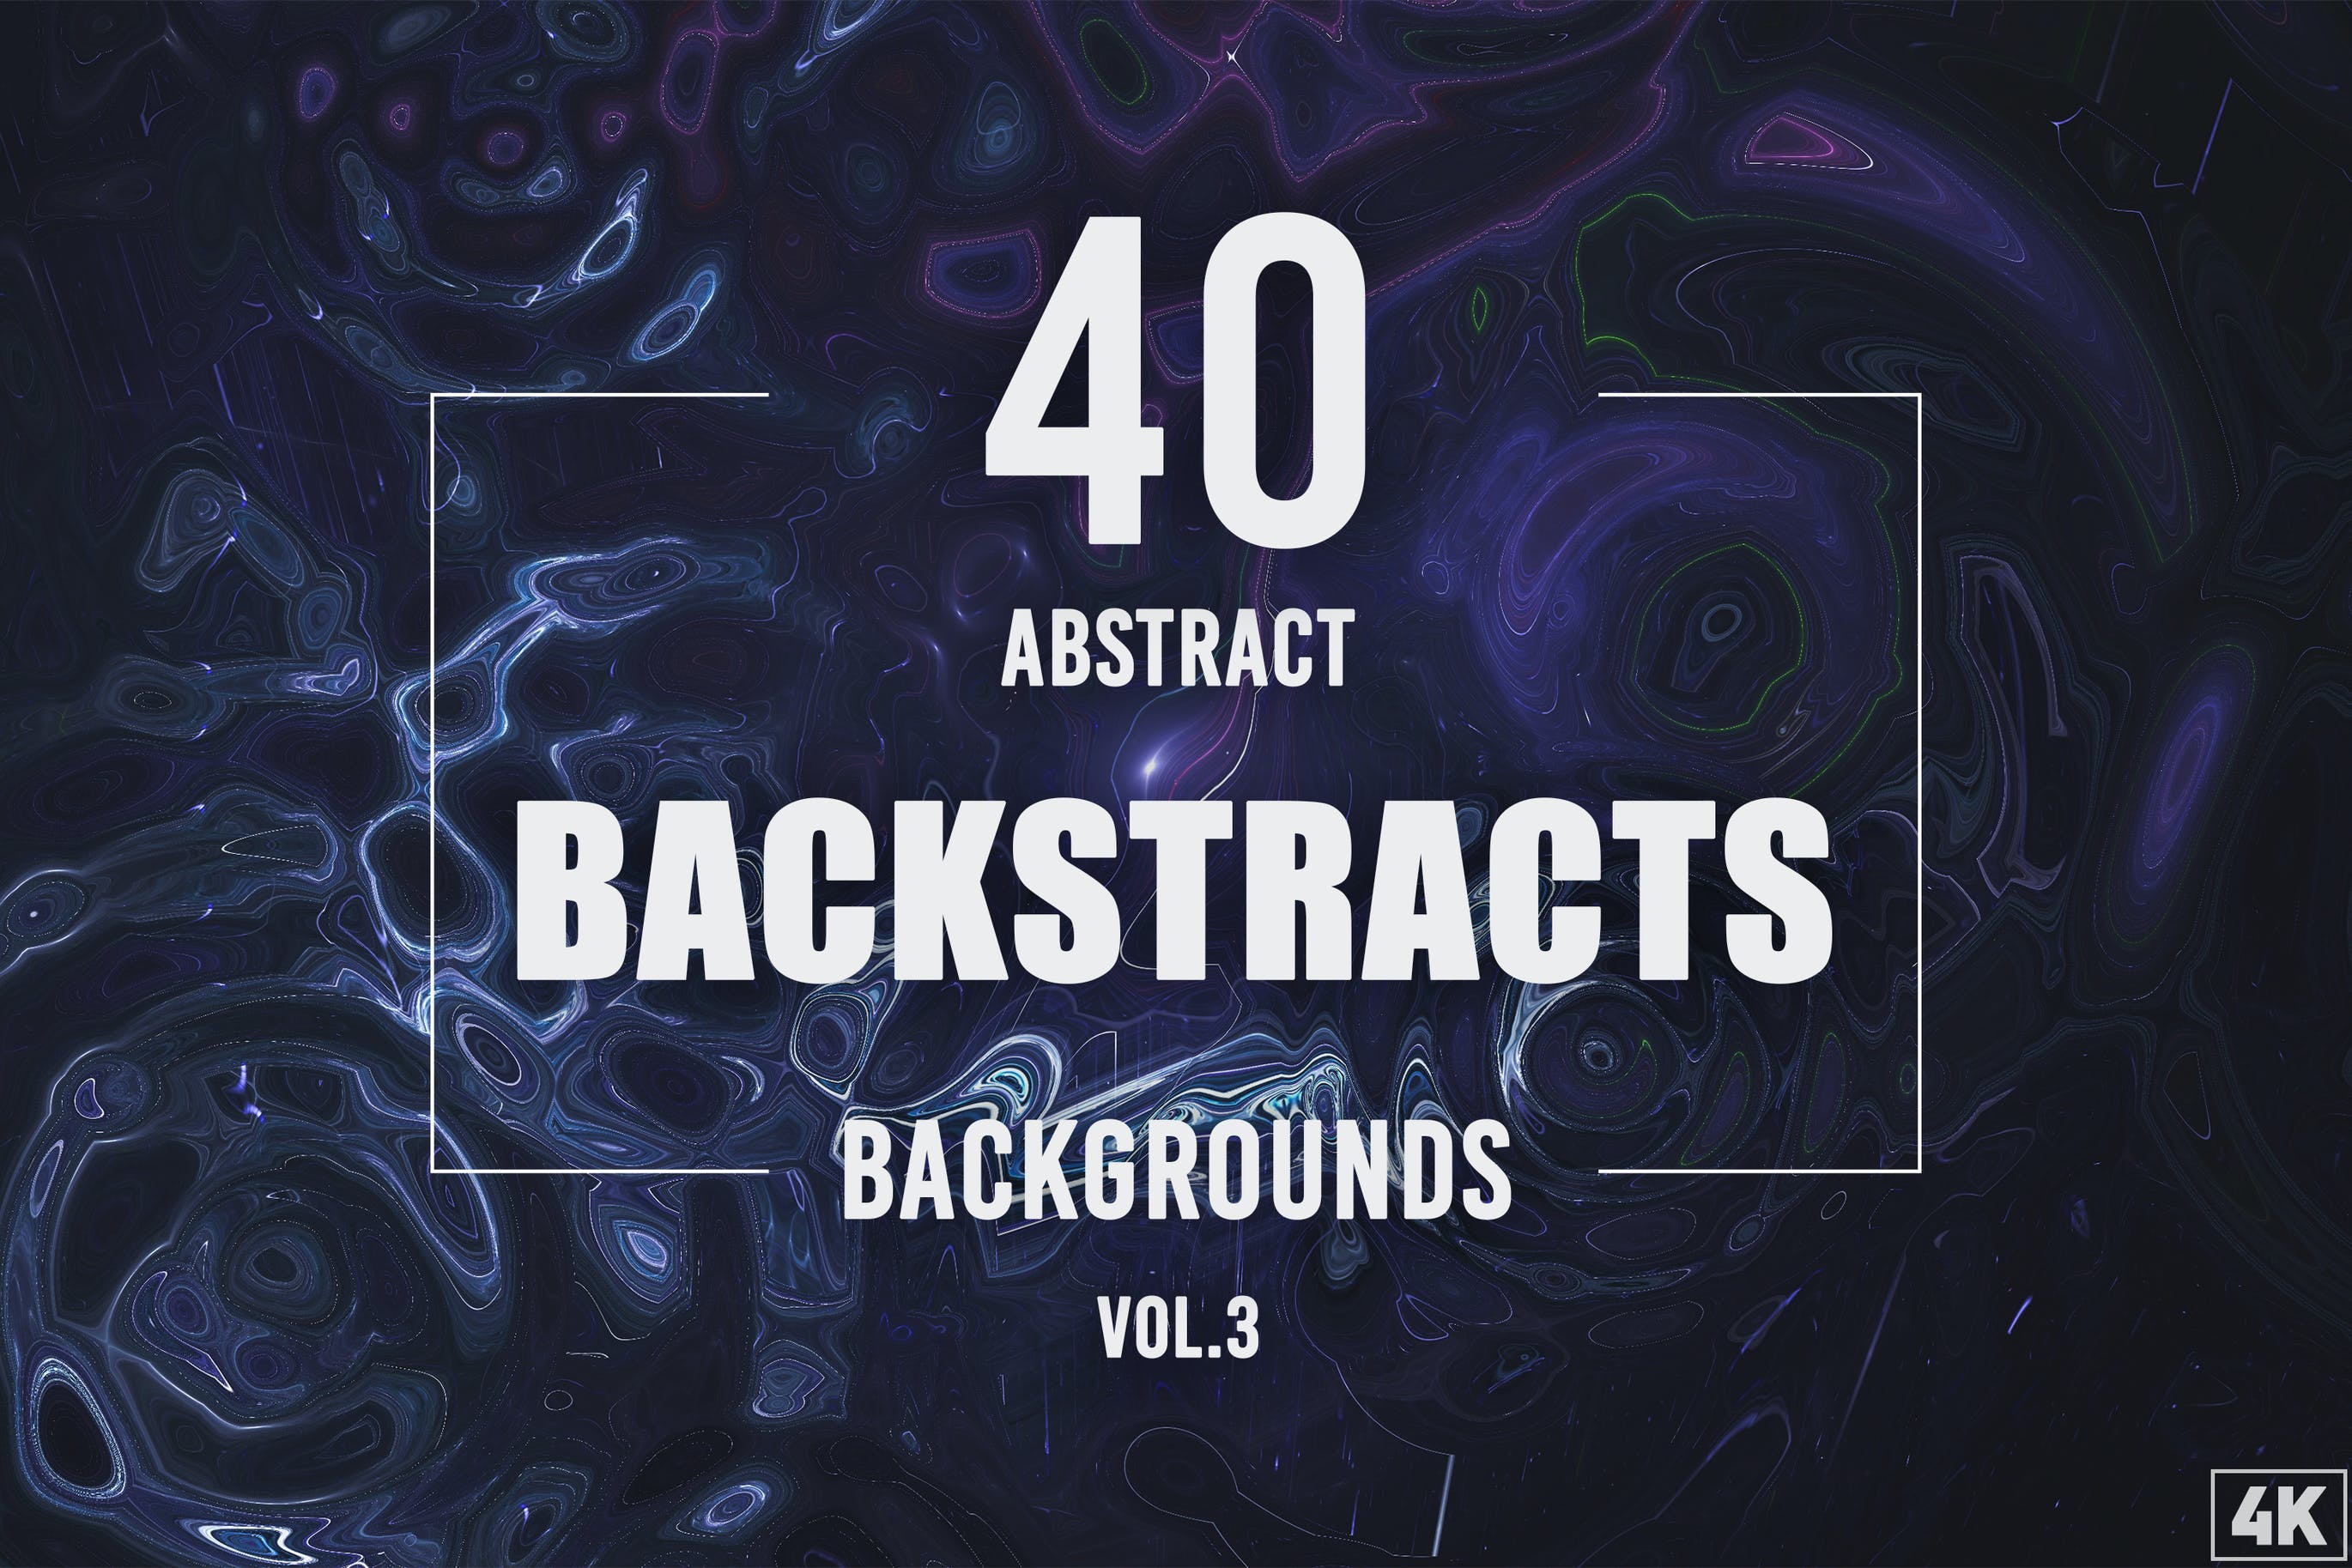 40个抽象流体背景v3 40 Abstract Backstracts – Vol. 3 图片素材 第1张